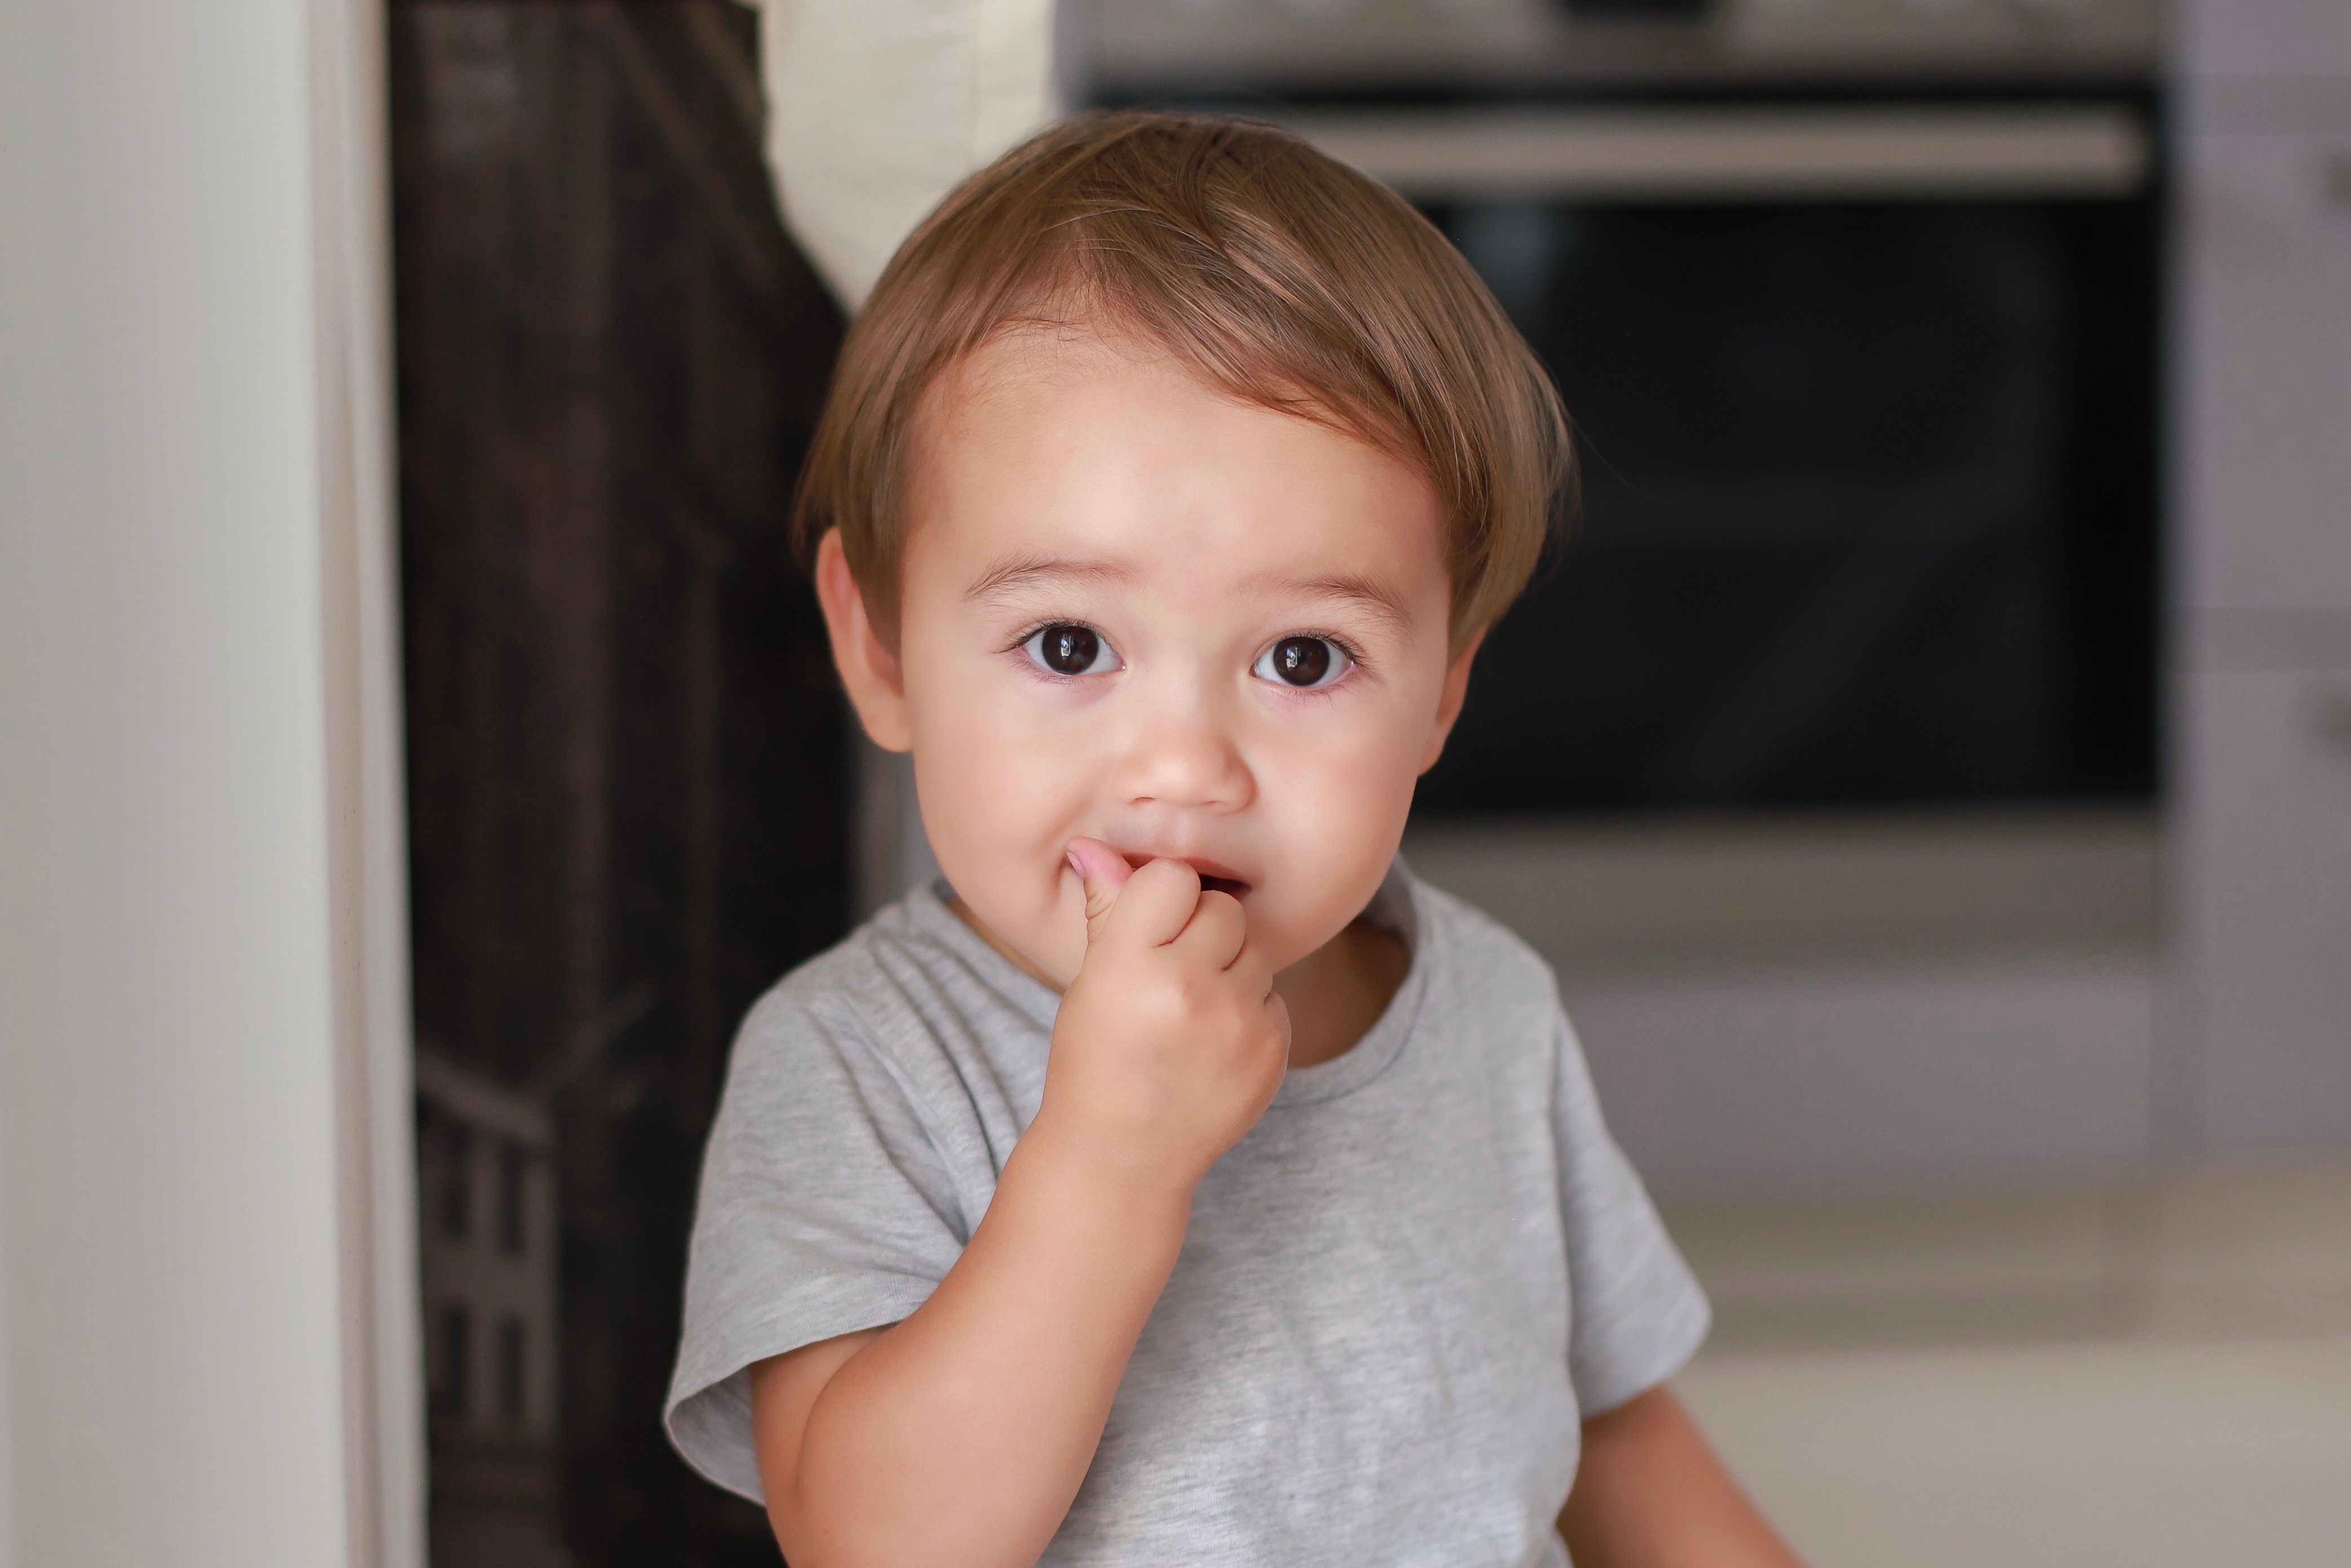 A baby boy | Source: Shutterstock